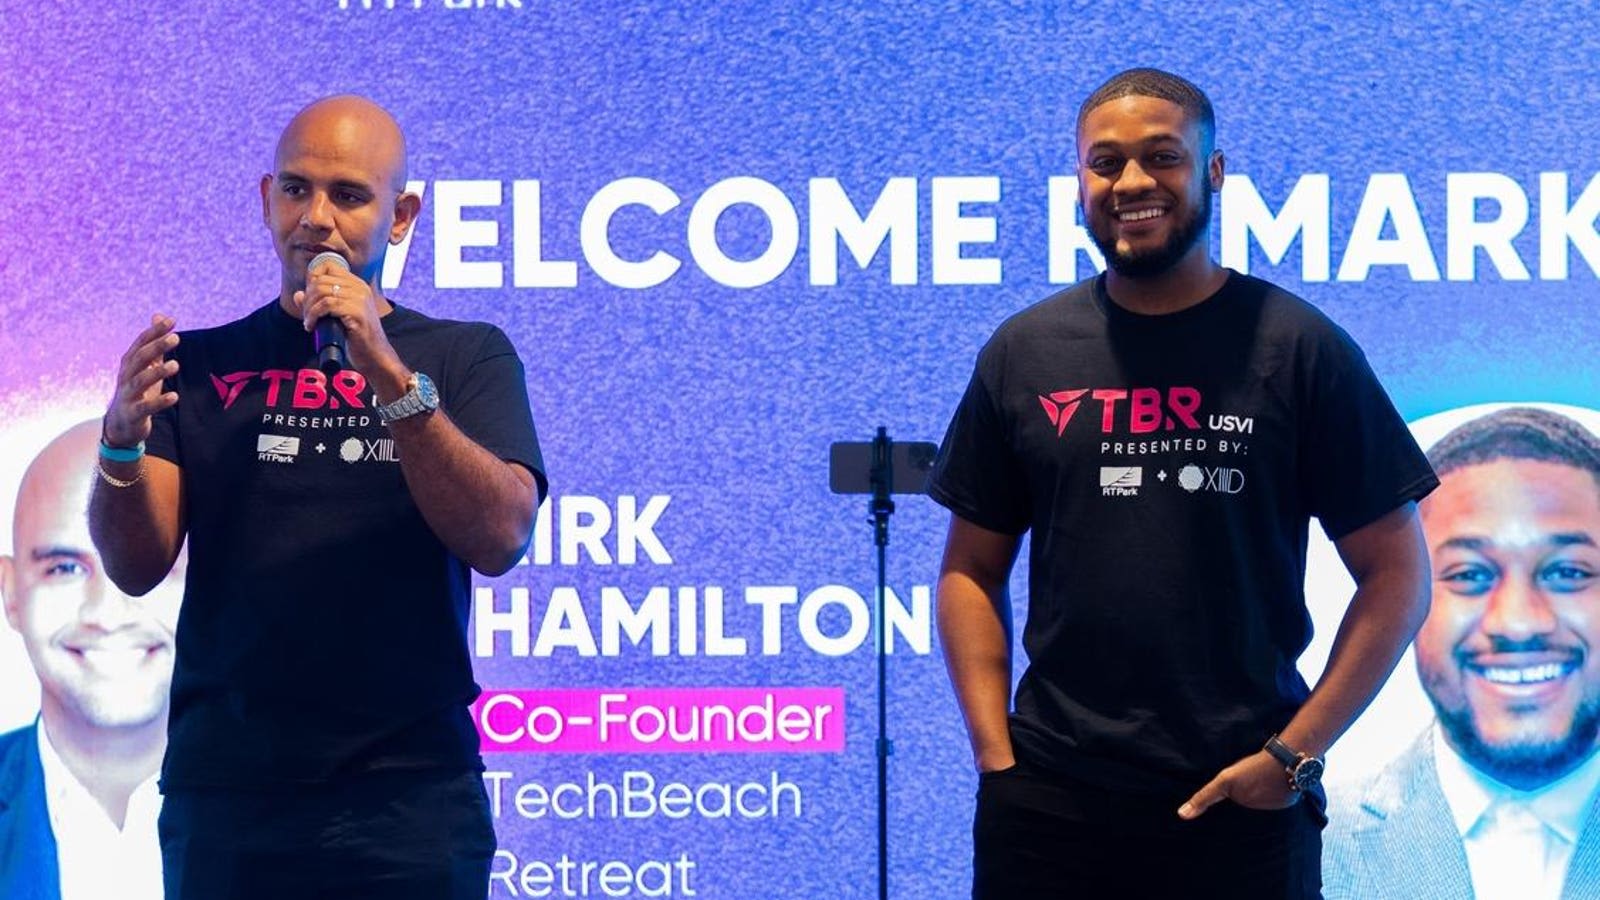 Kyle Maloney And Kirk-Anthony Hamilton Talk Tech Beach Retreat’s U.S. Virgin Islands Debut